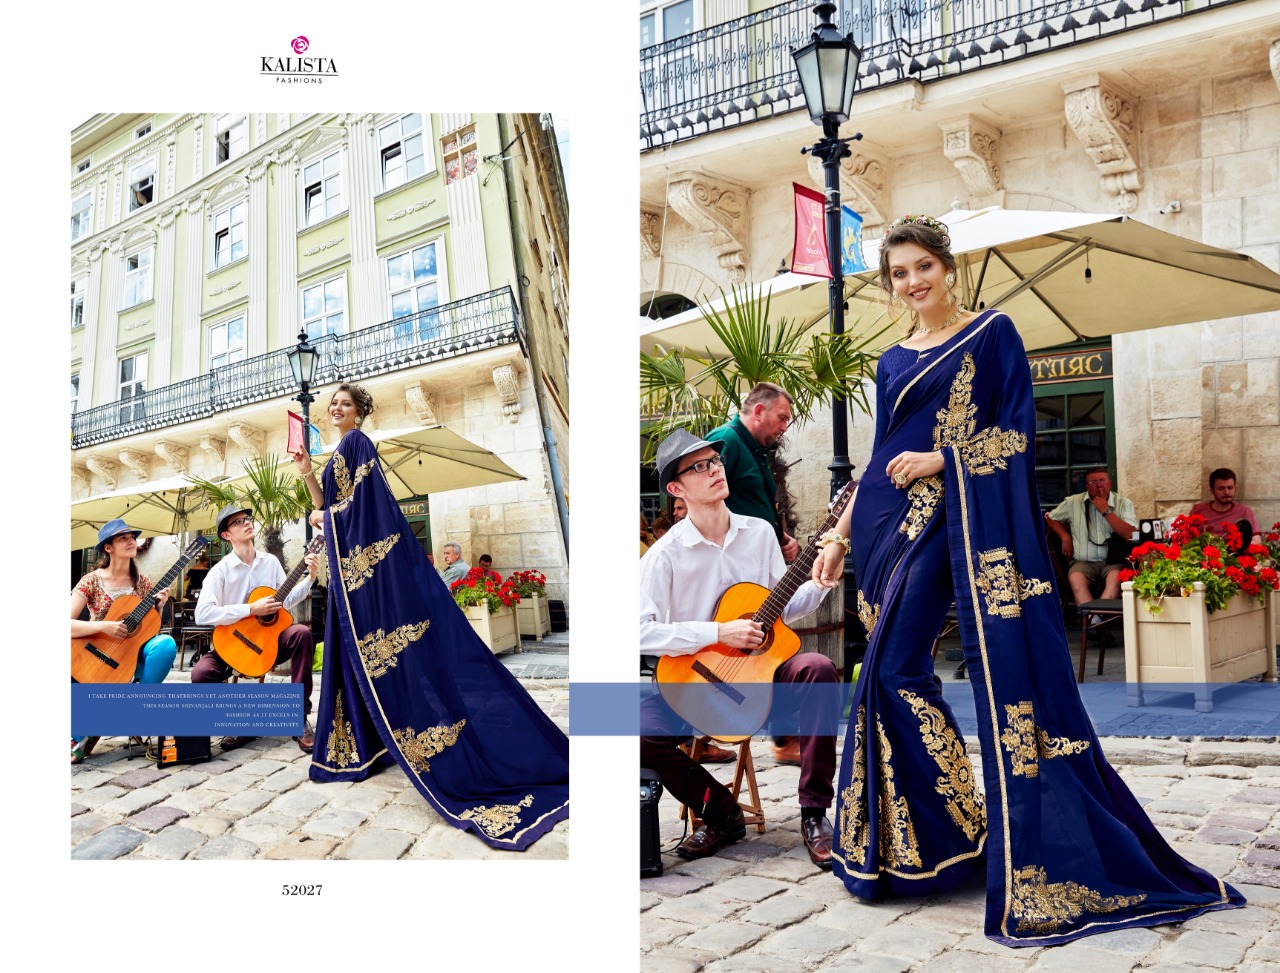 Kalista fashion presents rivaaj 2 casual traditional wear sarees collection